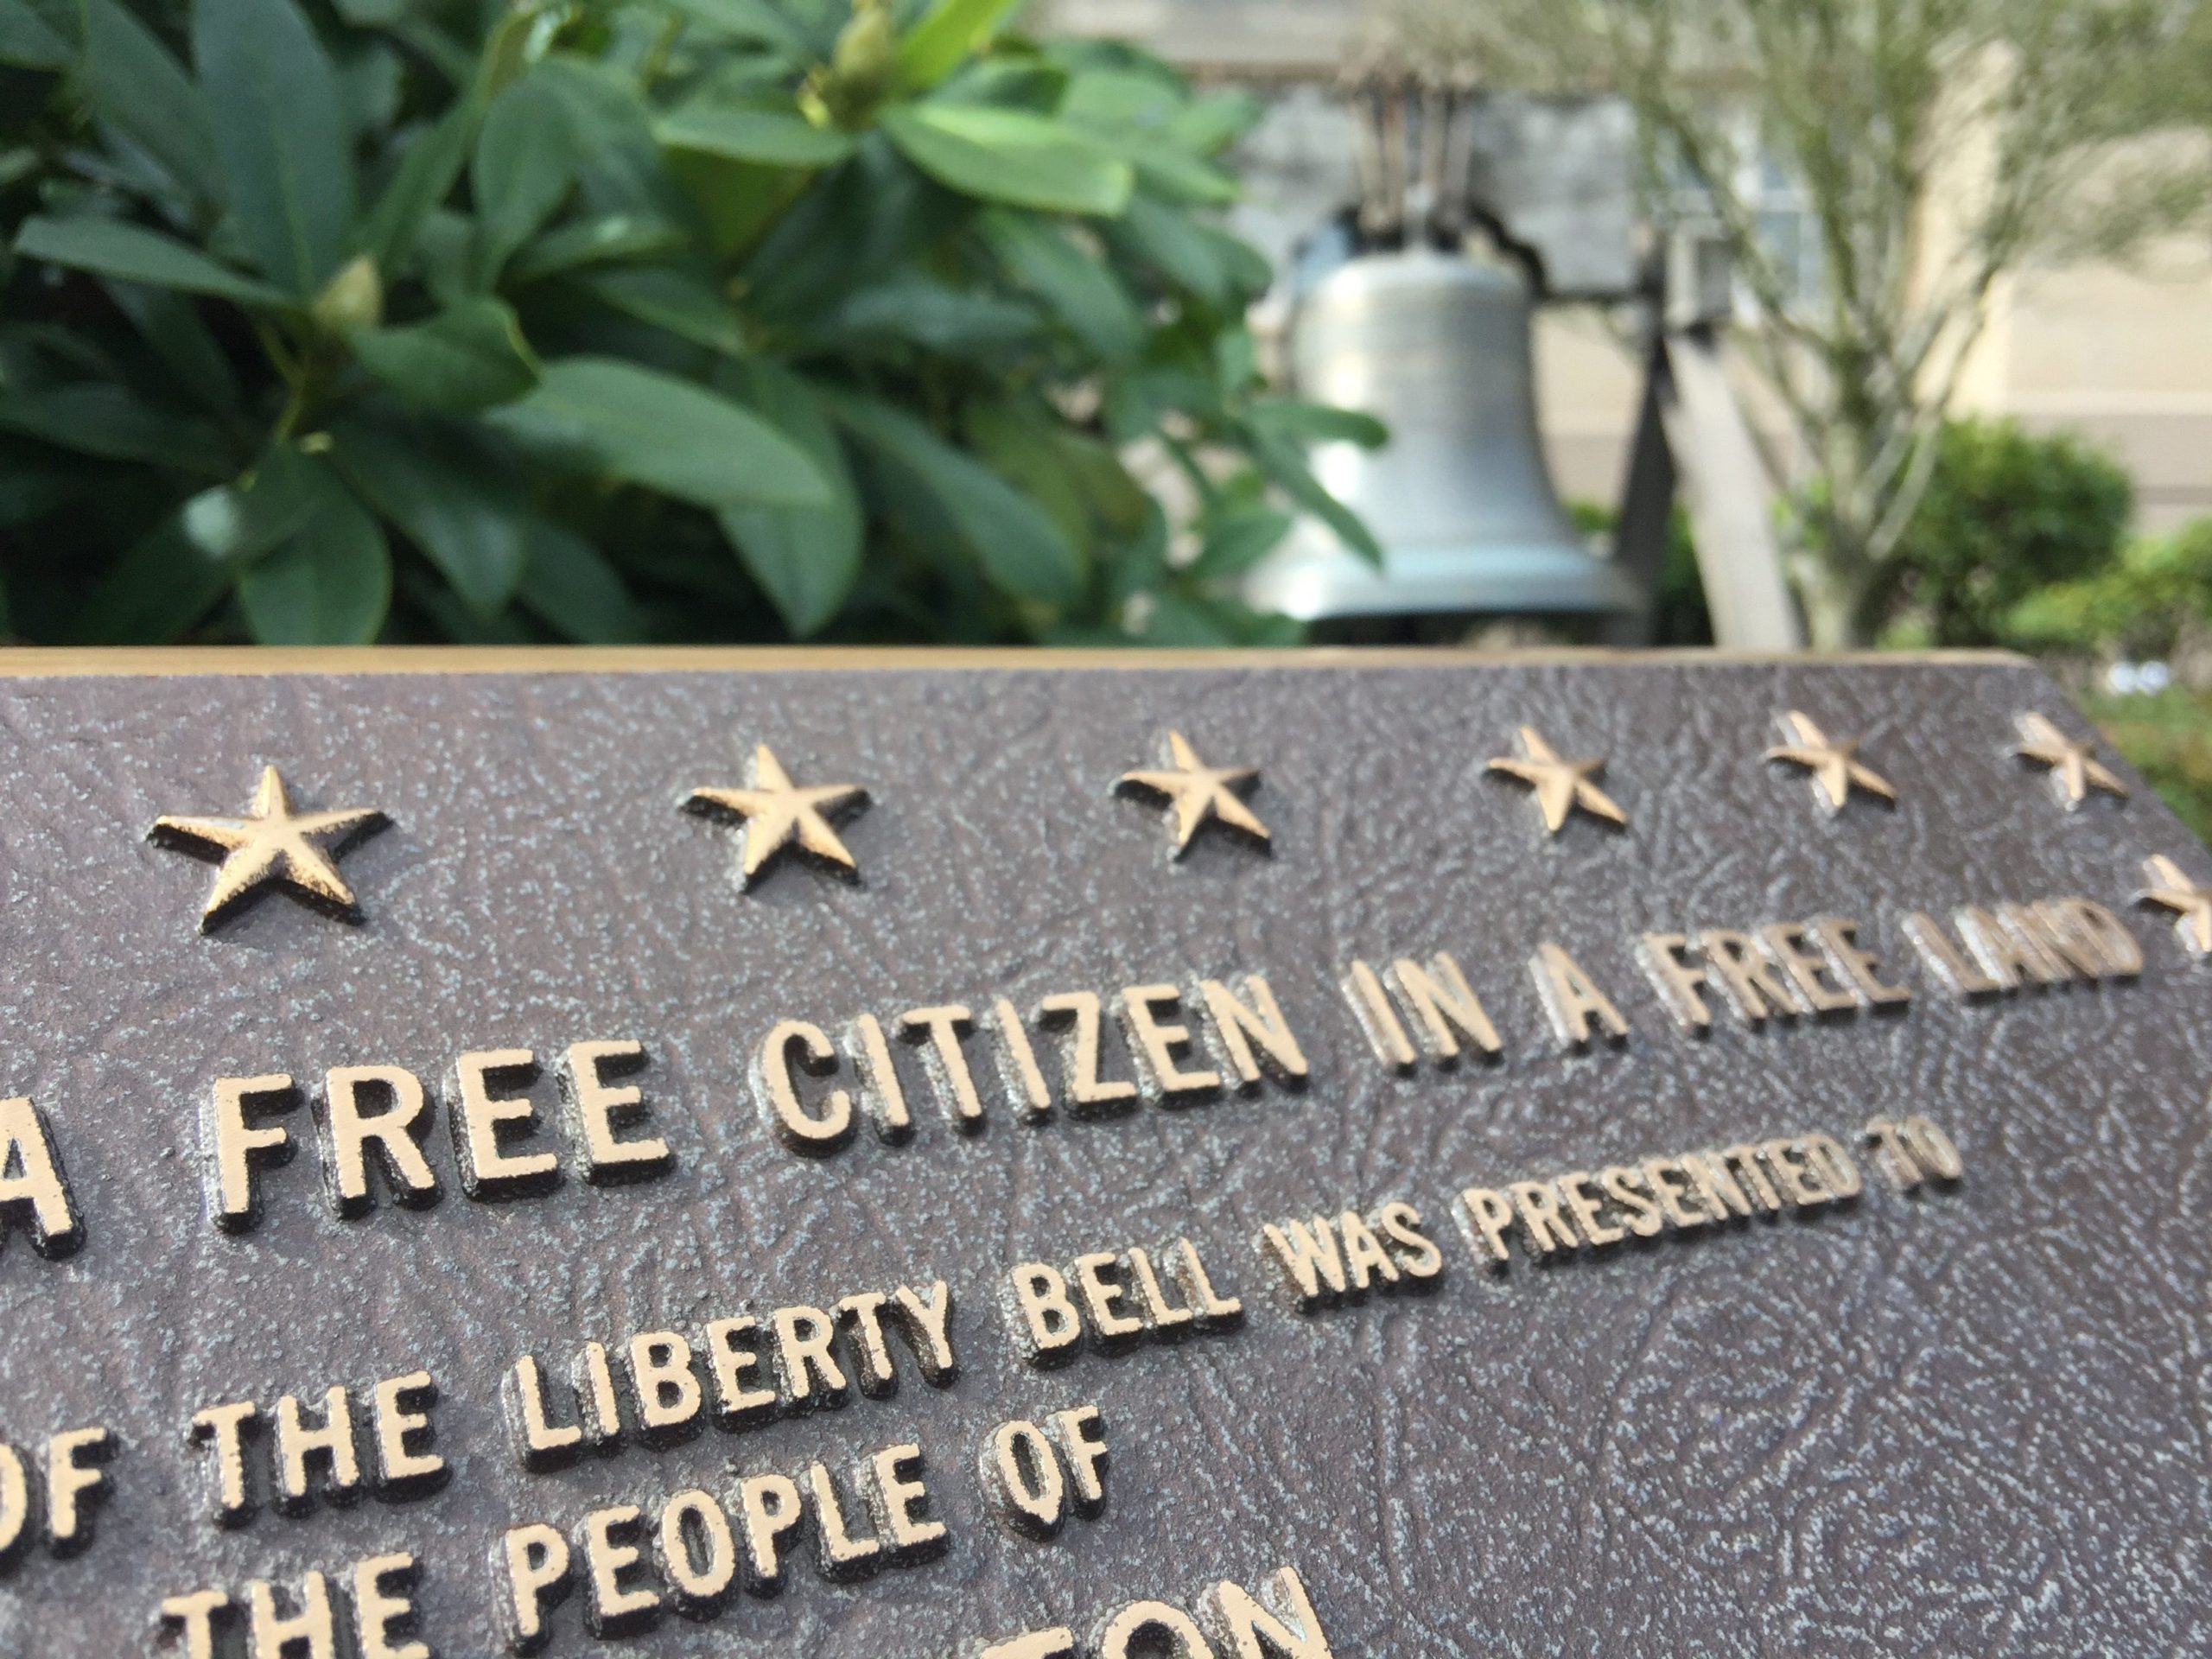 Every Liberty Bell replica